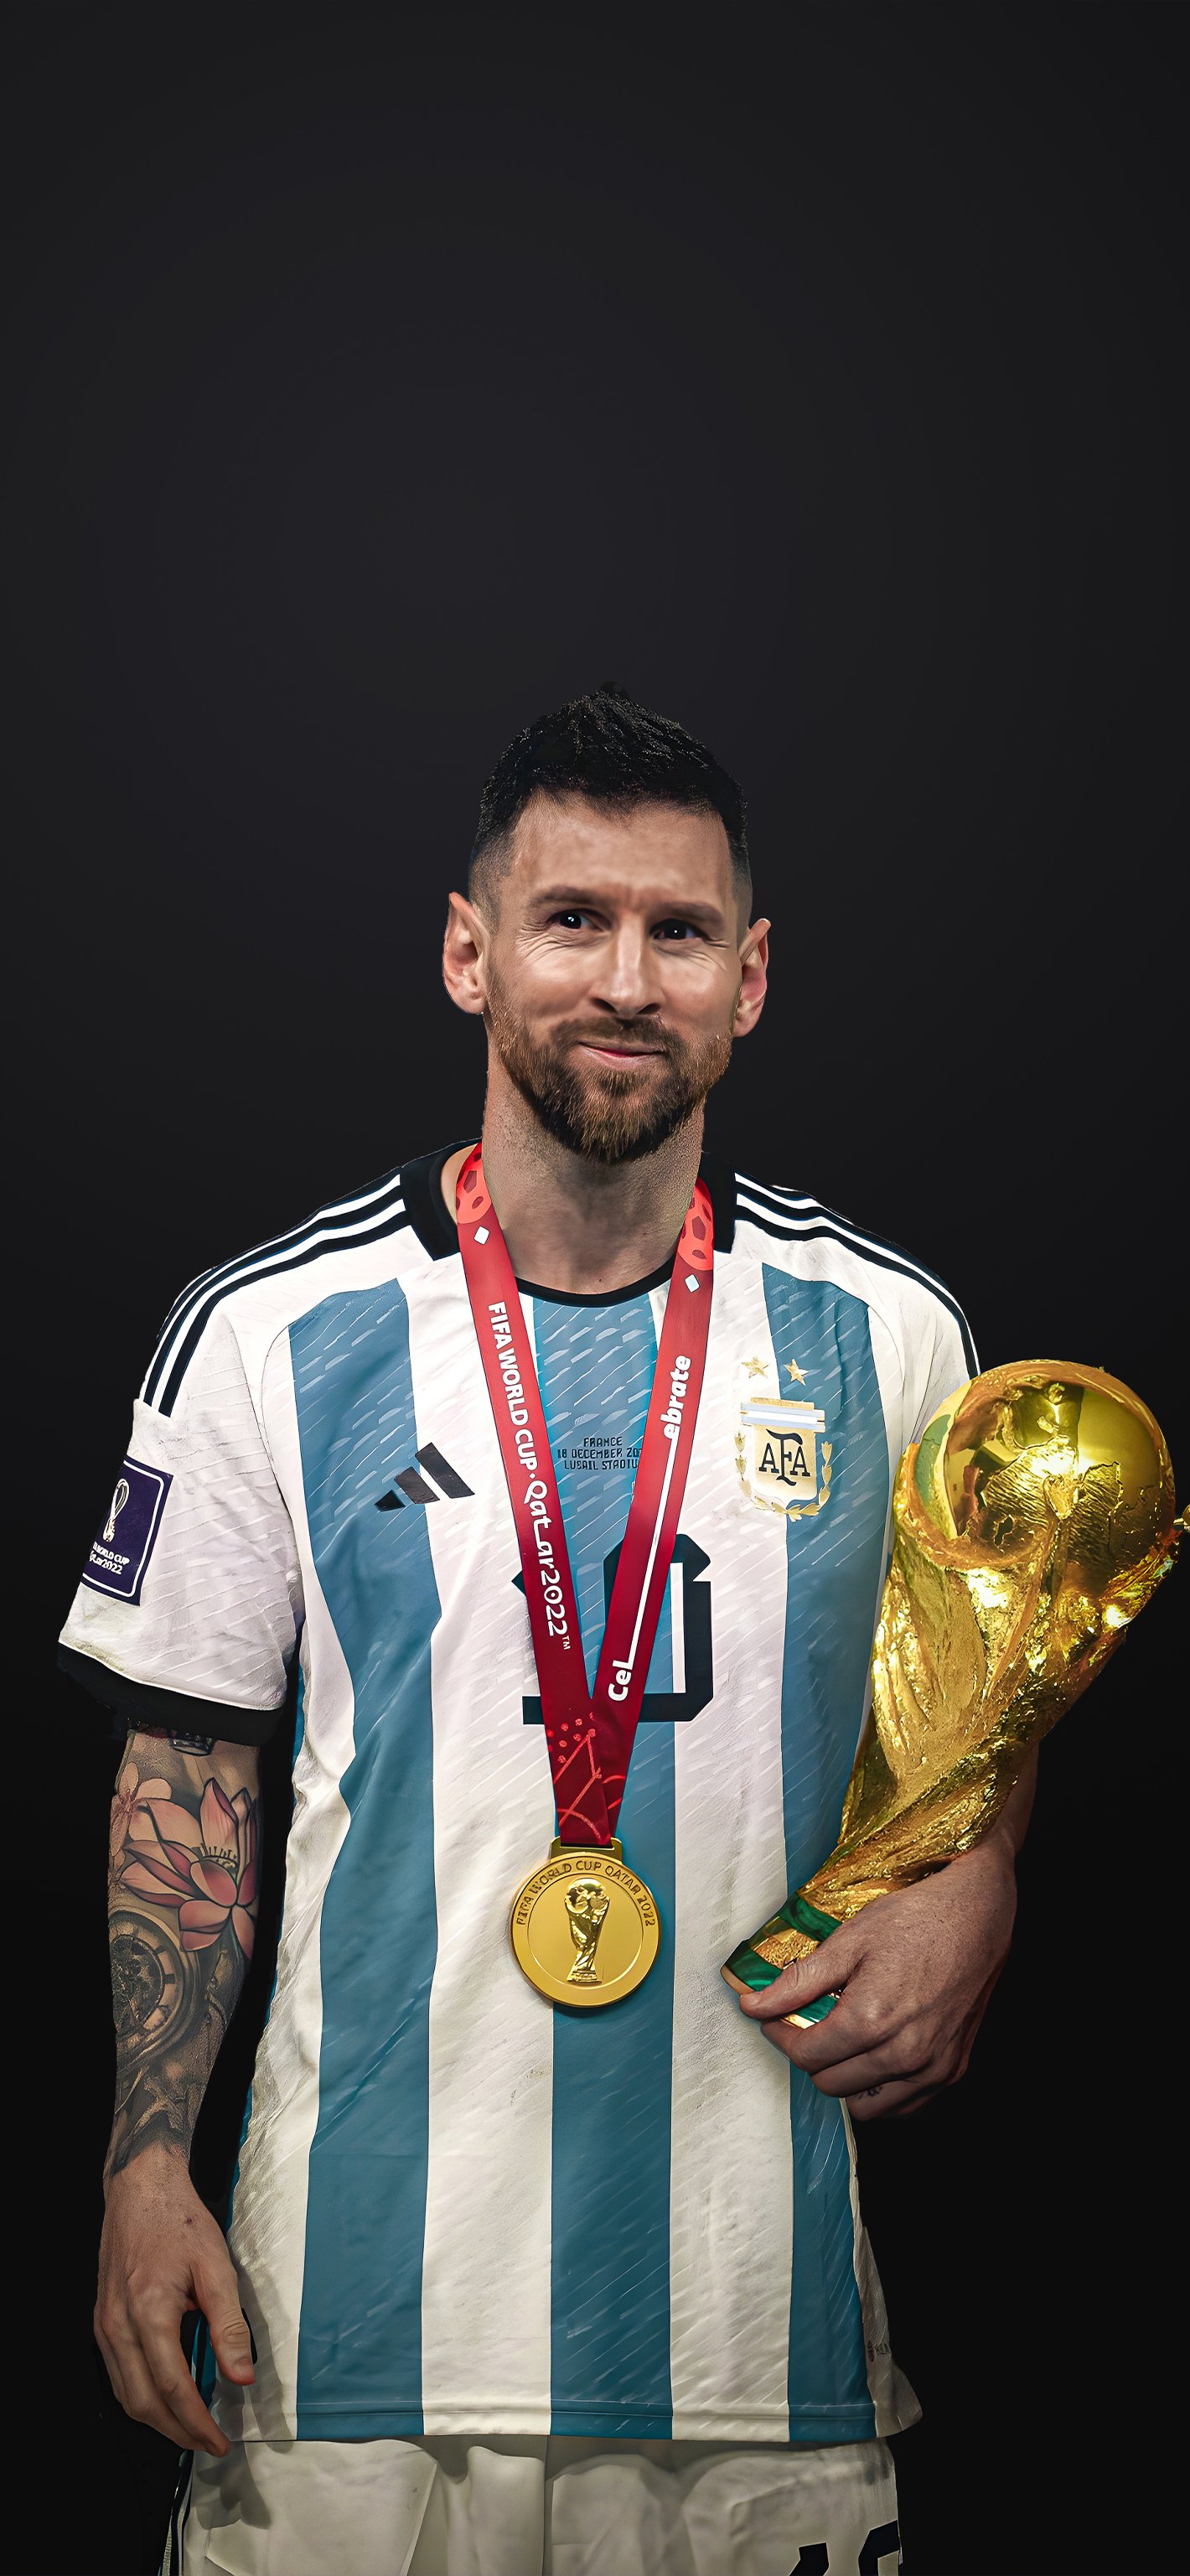 Messi World Cup Champion Lockscreen Wallpaper 4k by subhan22 on DeviantArt